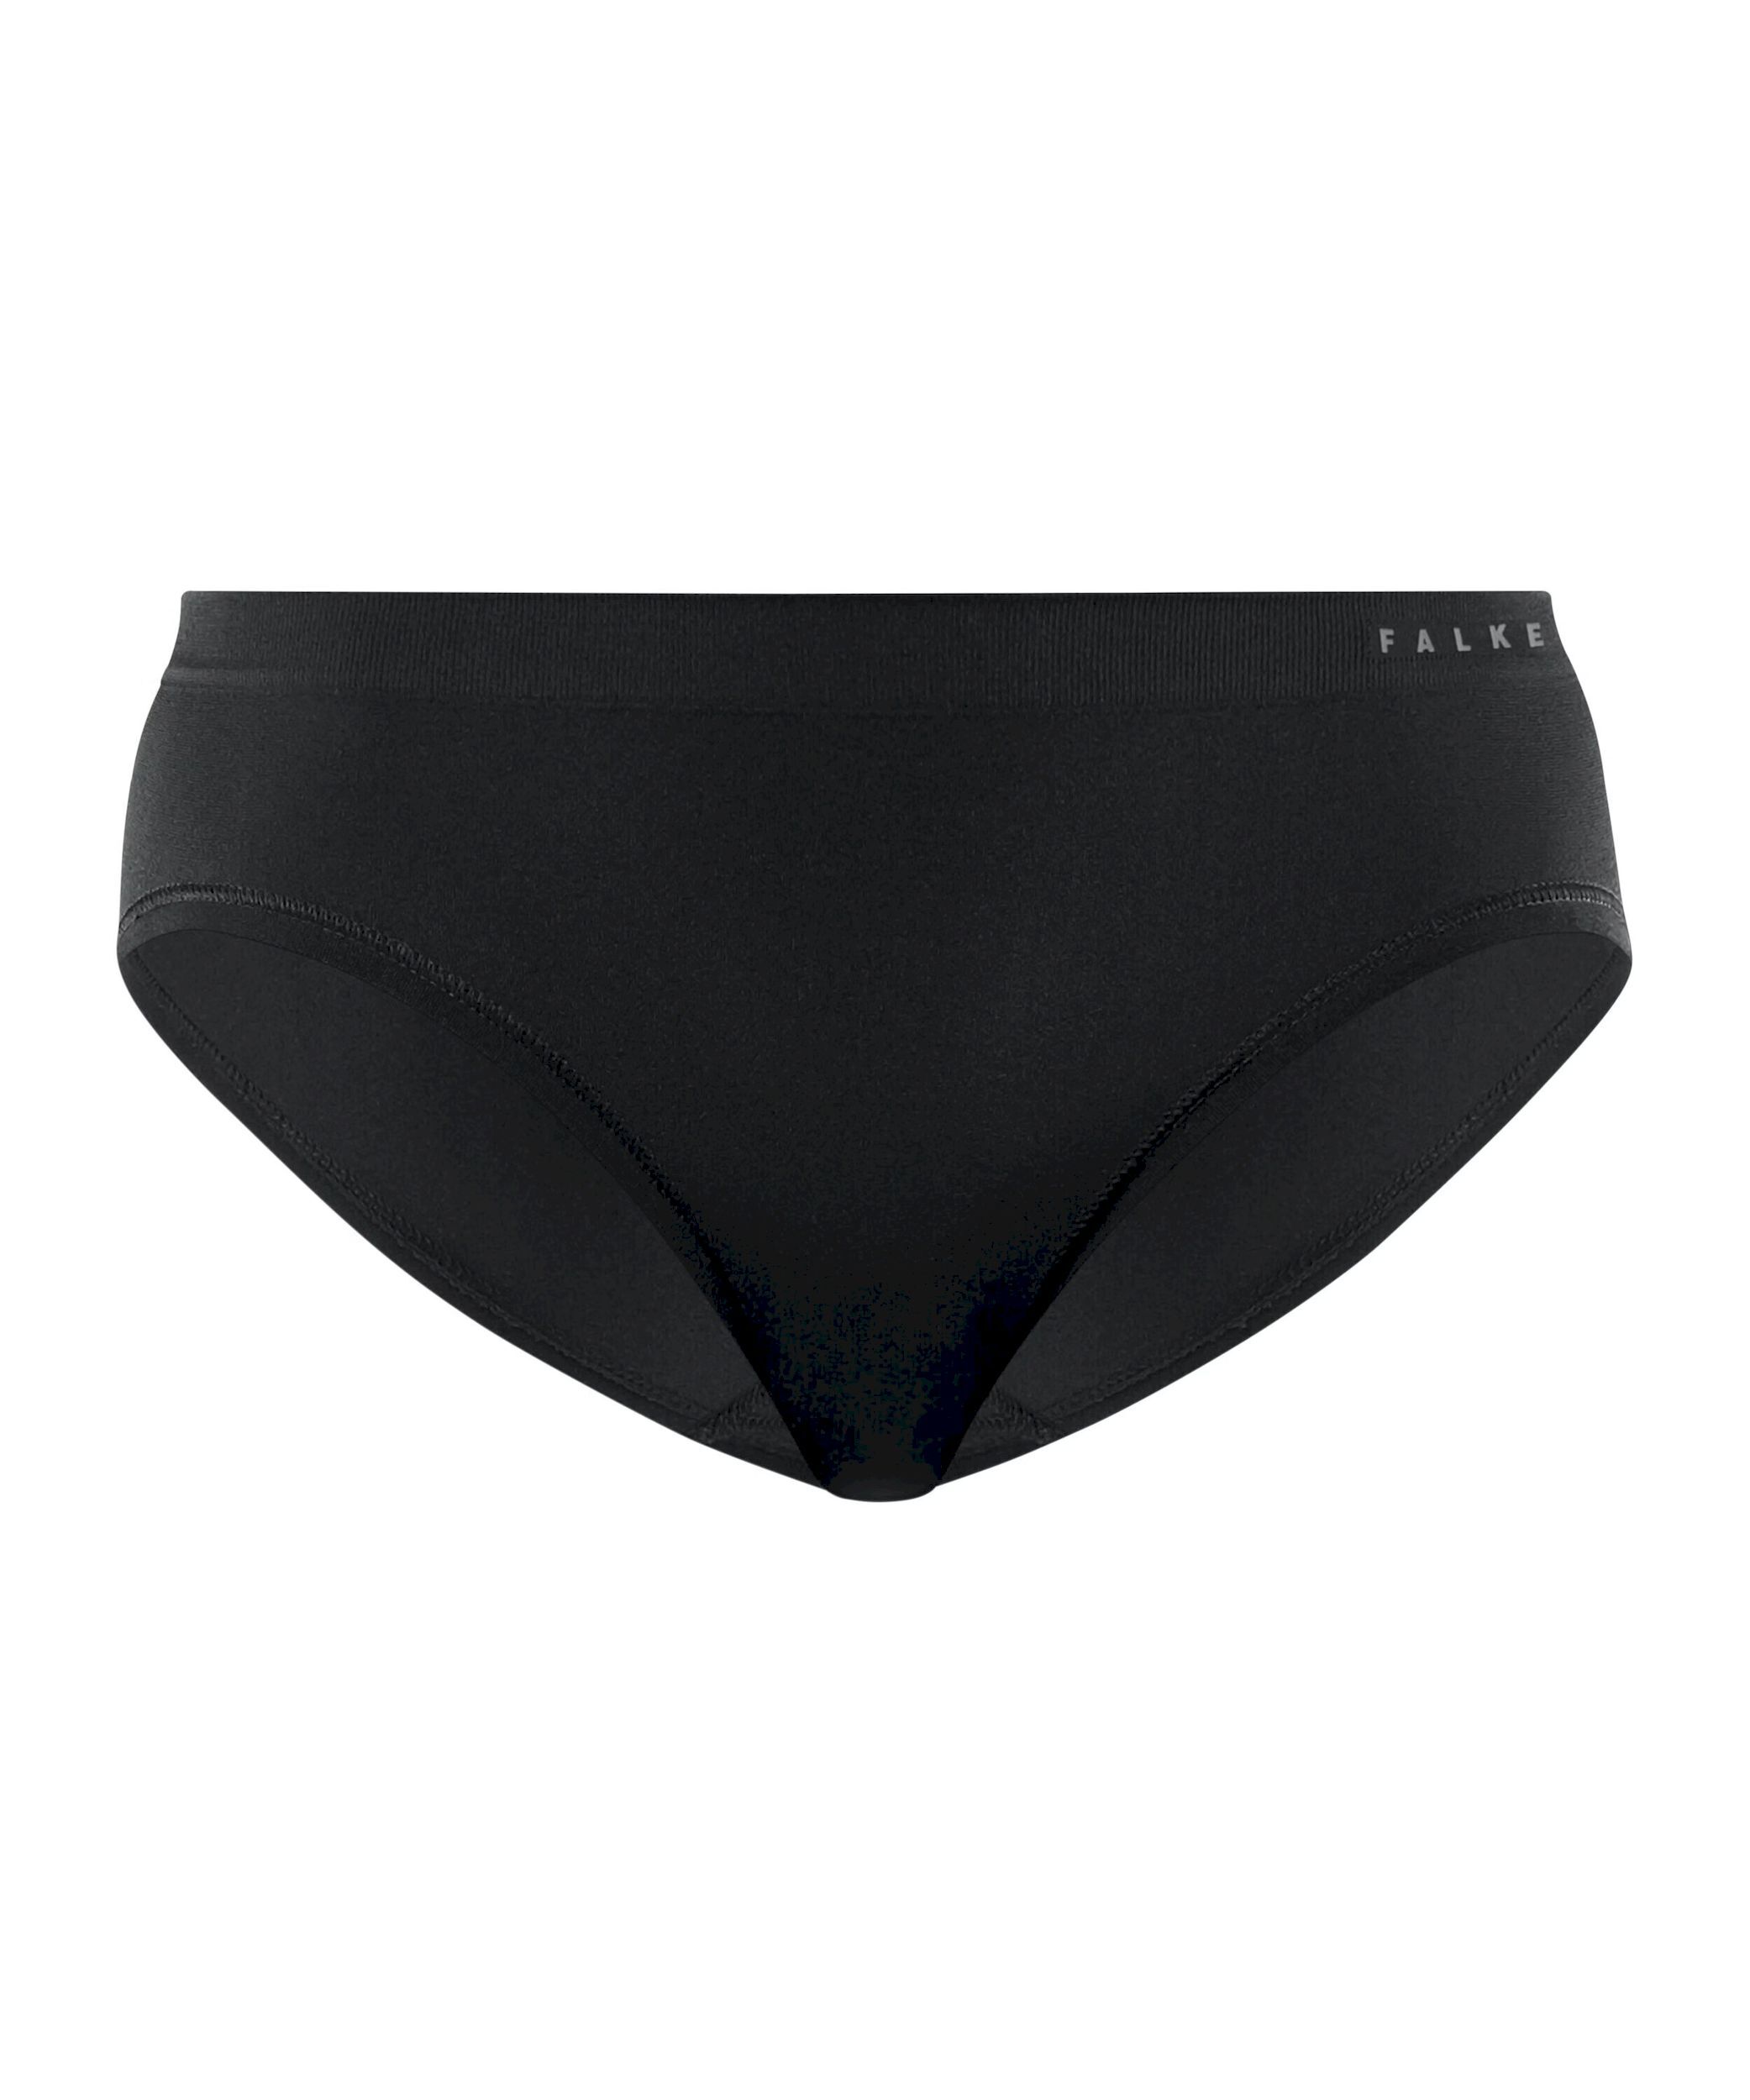 Falke Women's C Panties Regular Synthetic Base Layer, 44% OFF